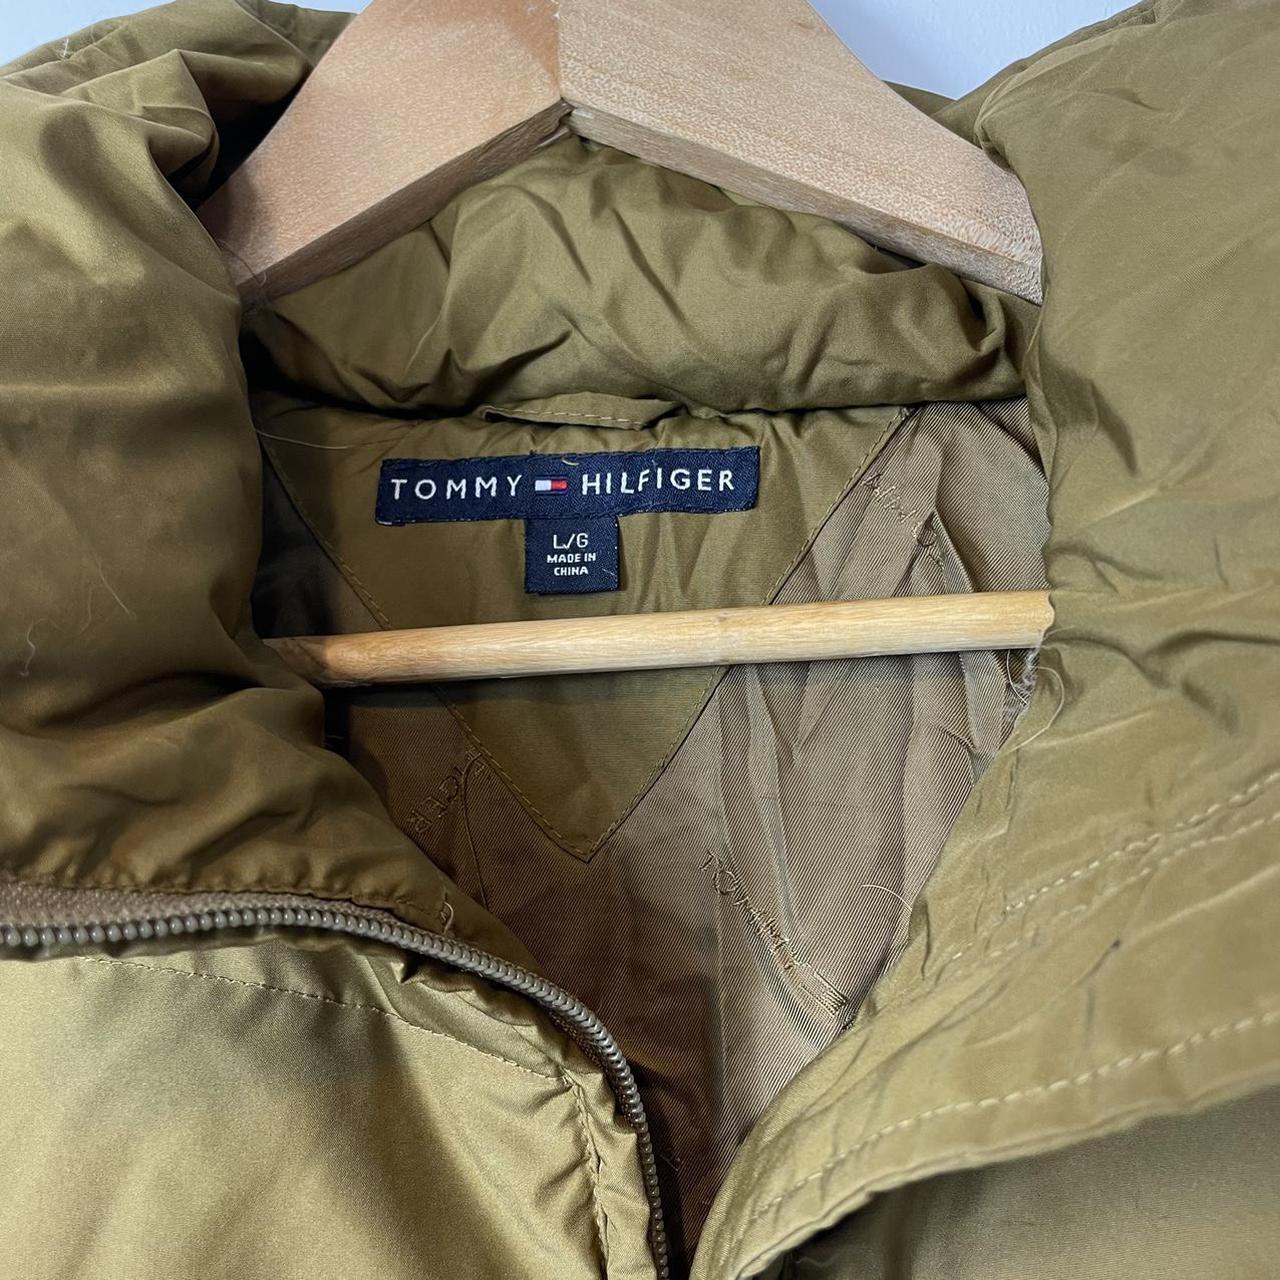 Product Image 3 - Tommy Hilfiger Mustard Puffer Jacket/Coat

-